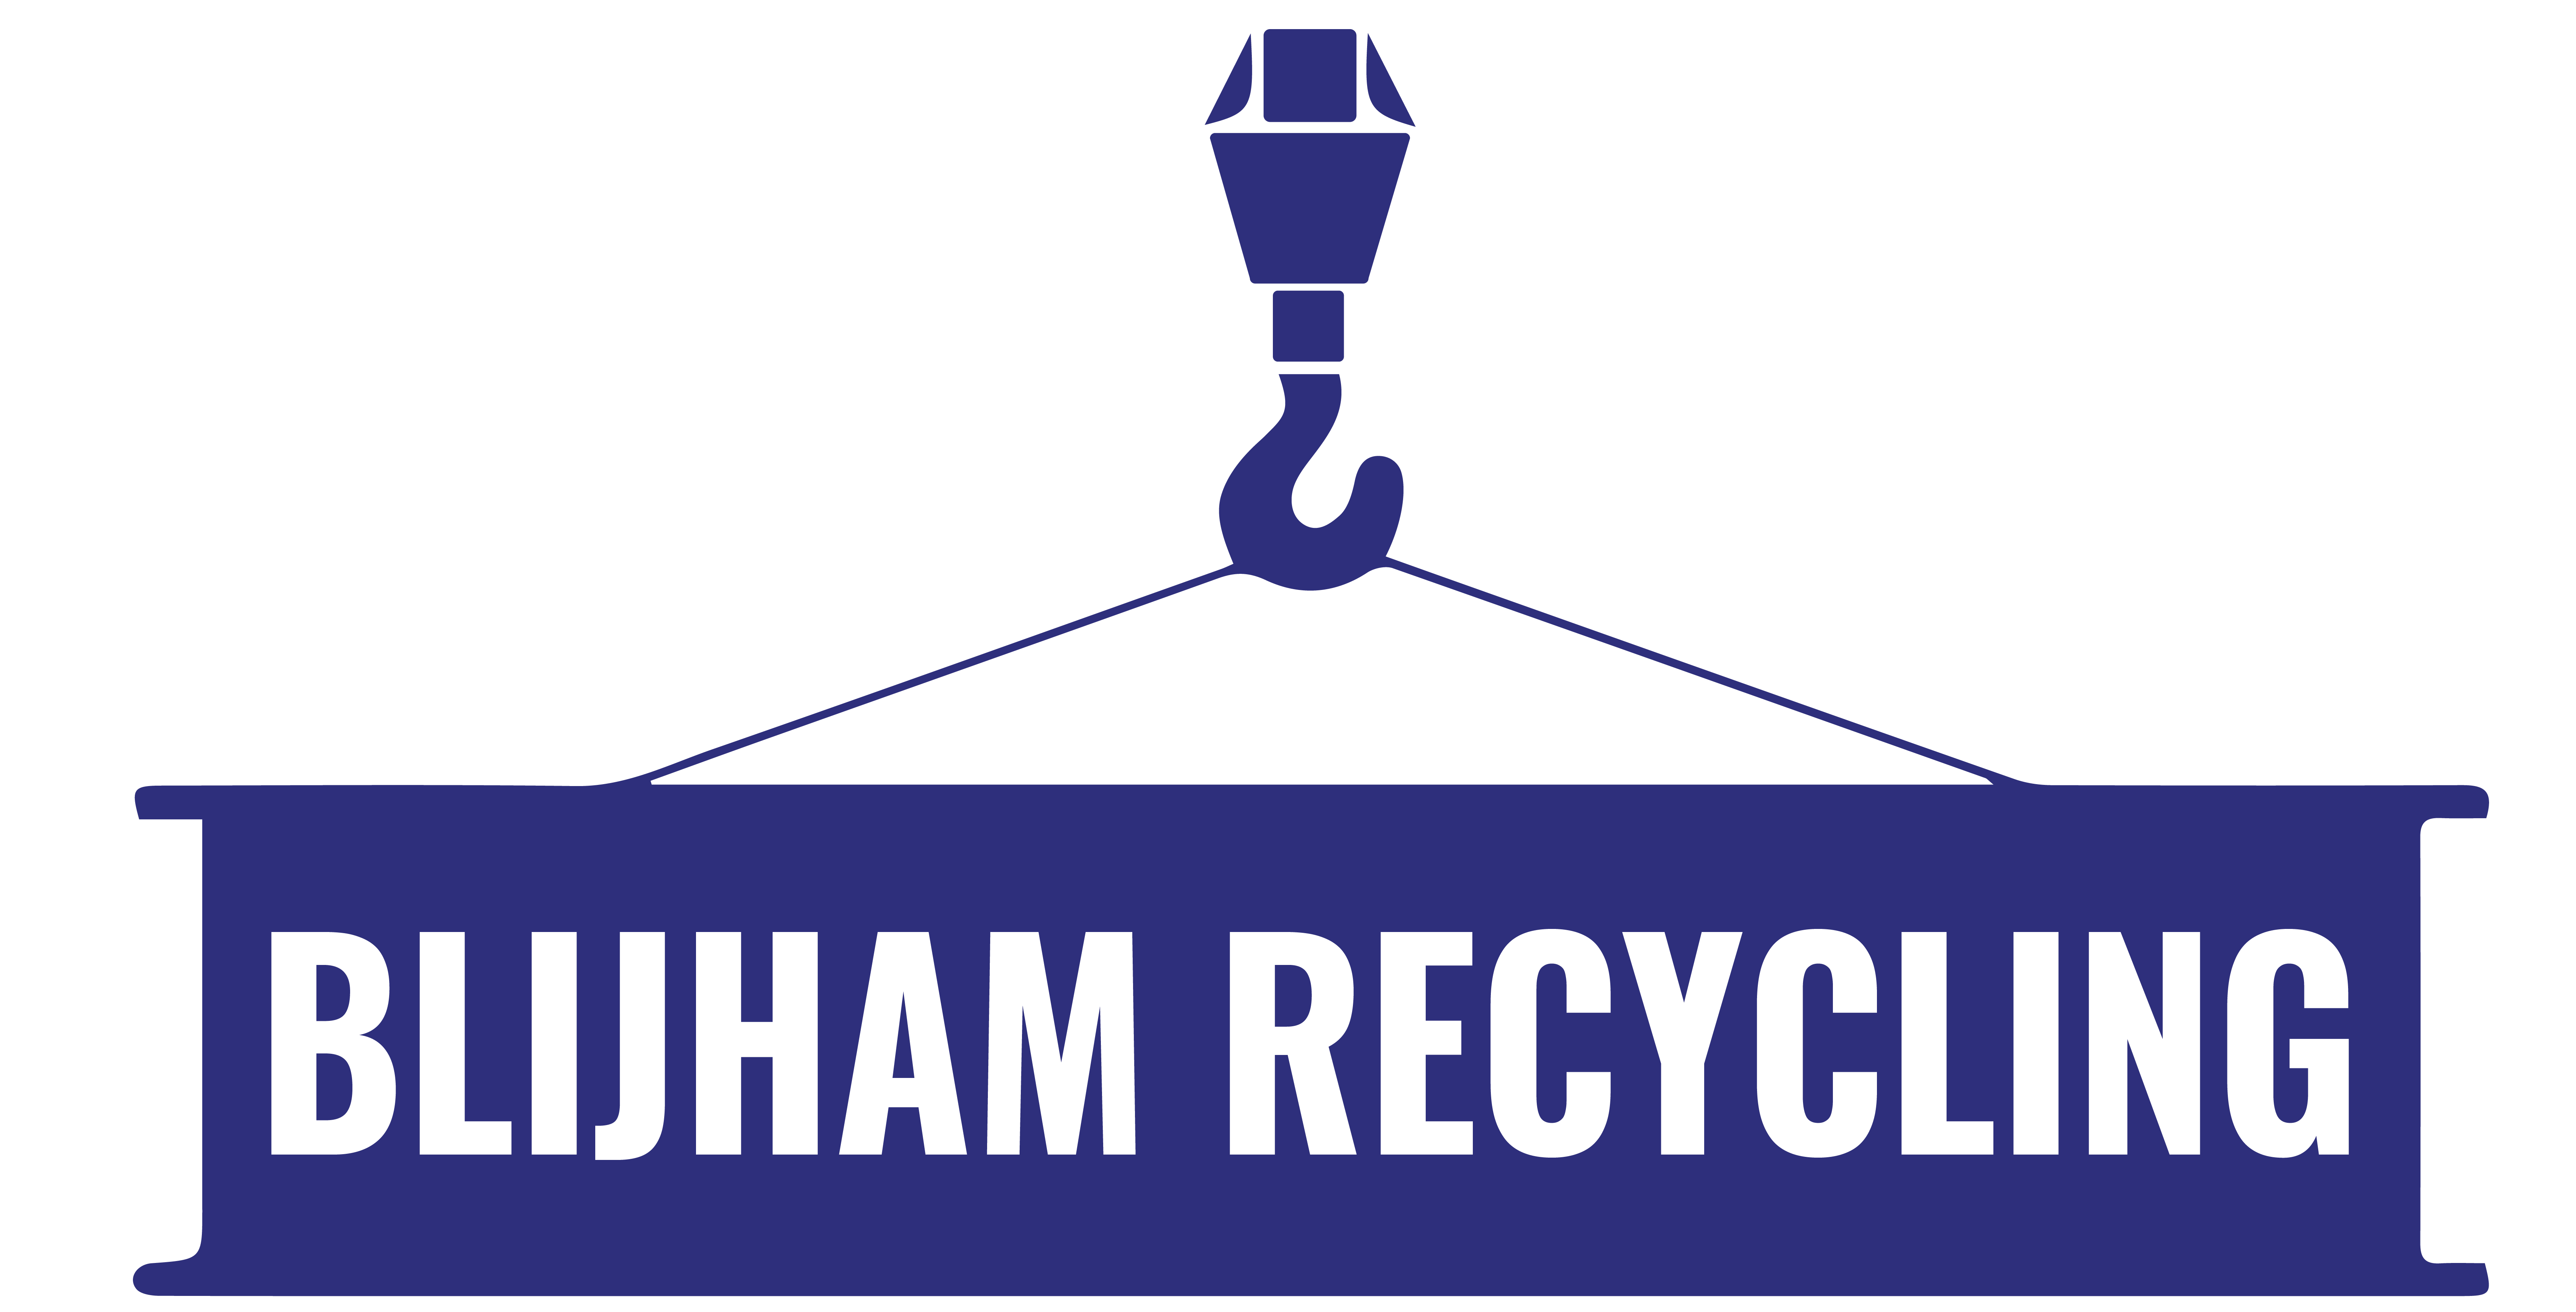 Blijham Recycling